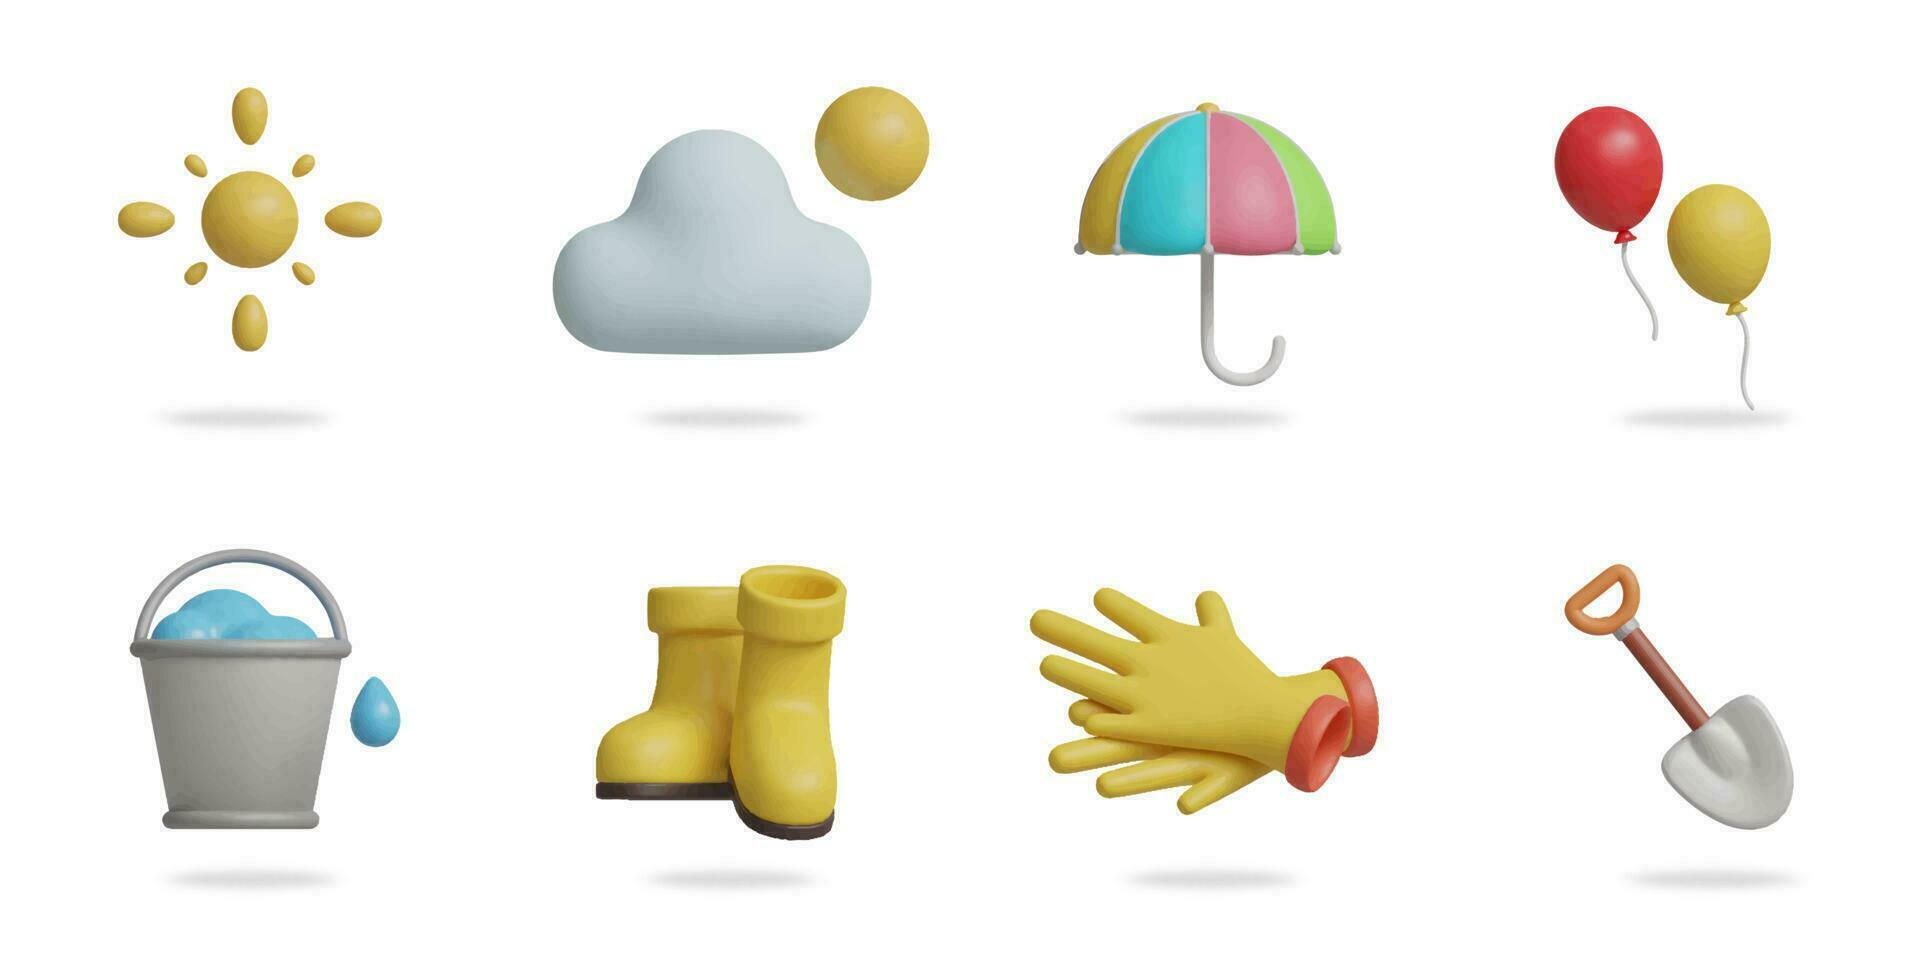 weather and gardening equipment 3D vector icon set. sun, sunny cloud, umbrella, balloon, bucket, garden boots, gardening gloves, shovel